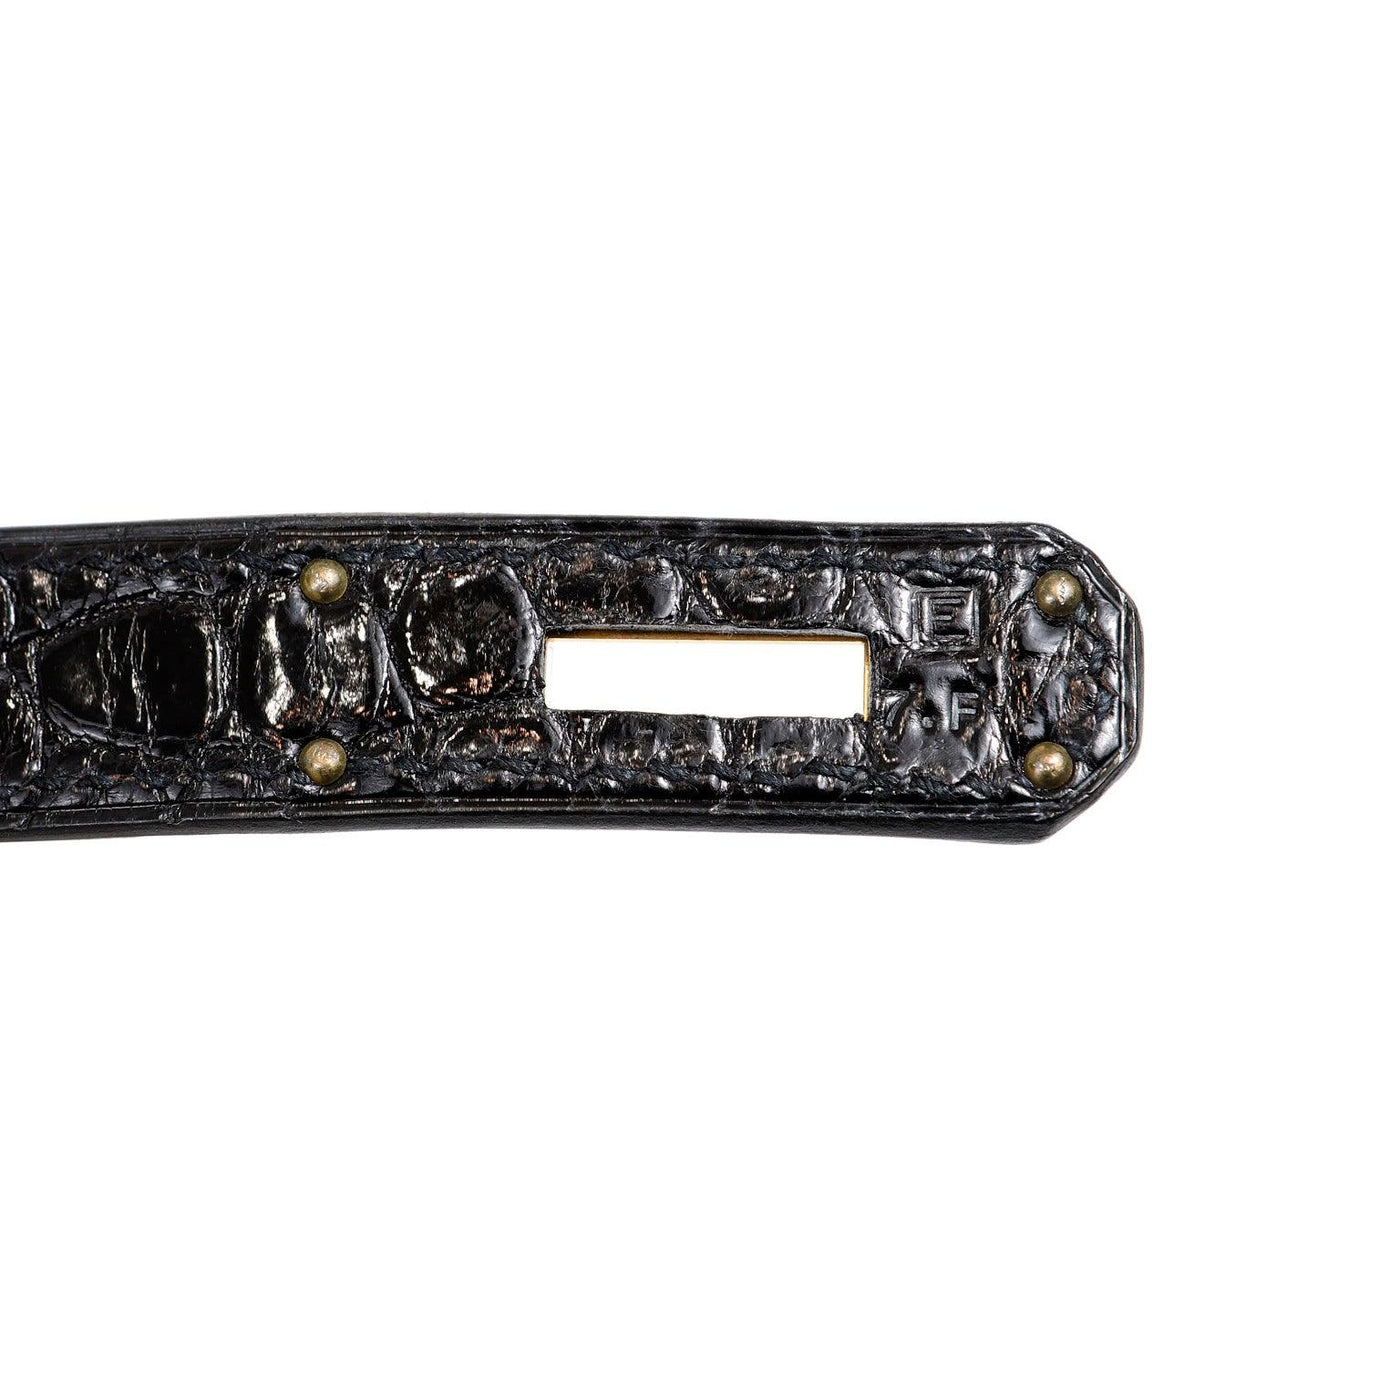 Hermès Birkin 35 Crocodile Black - Gold Hardware